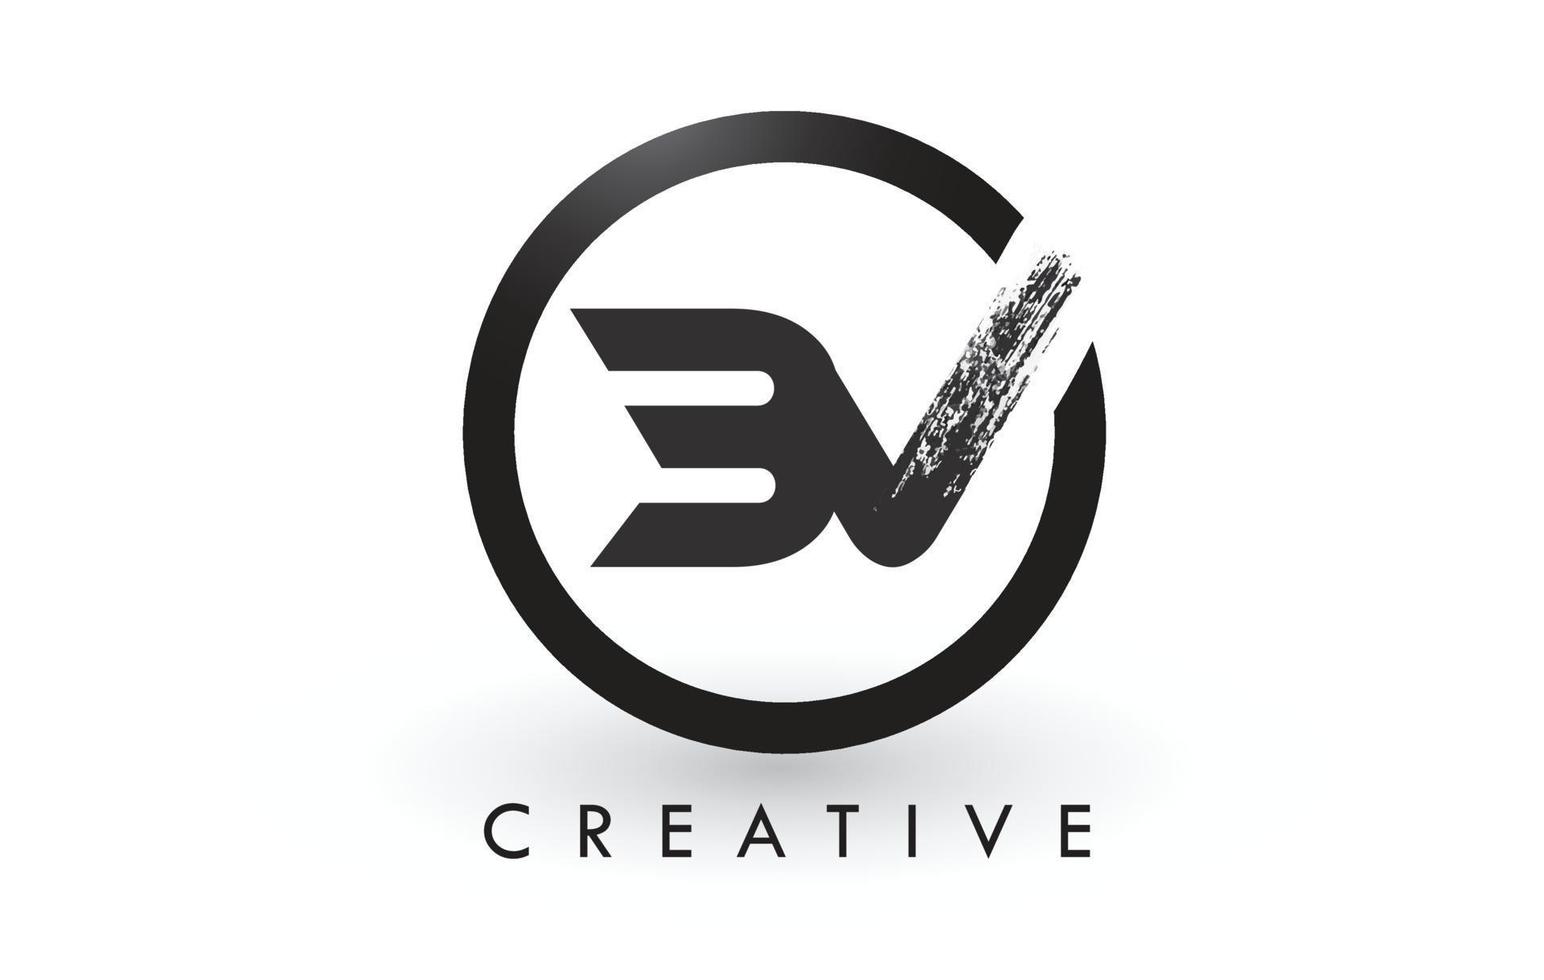 design de logotipo de letra de escova bv. logotipo do ícone de letras escovadas criativo. vetor